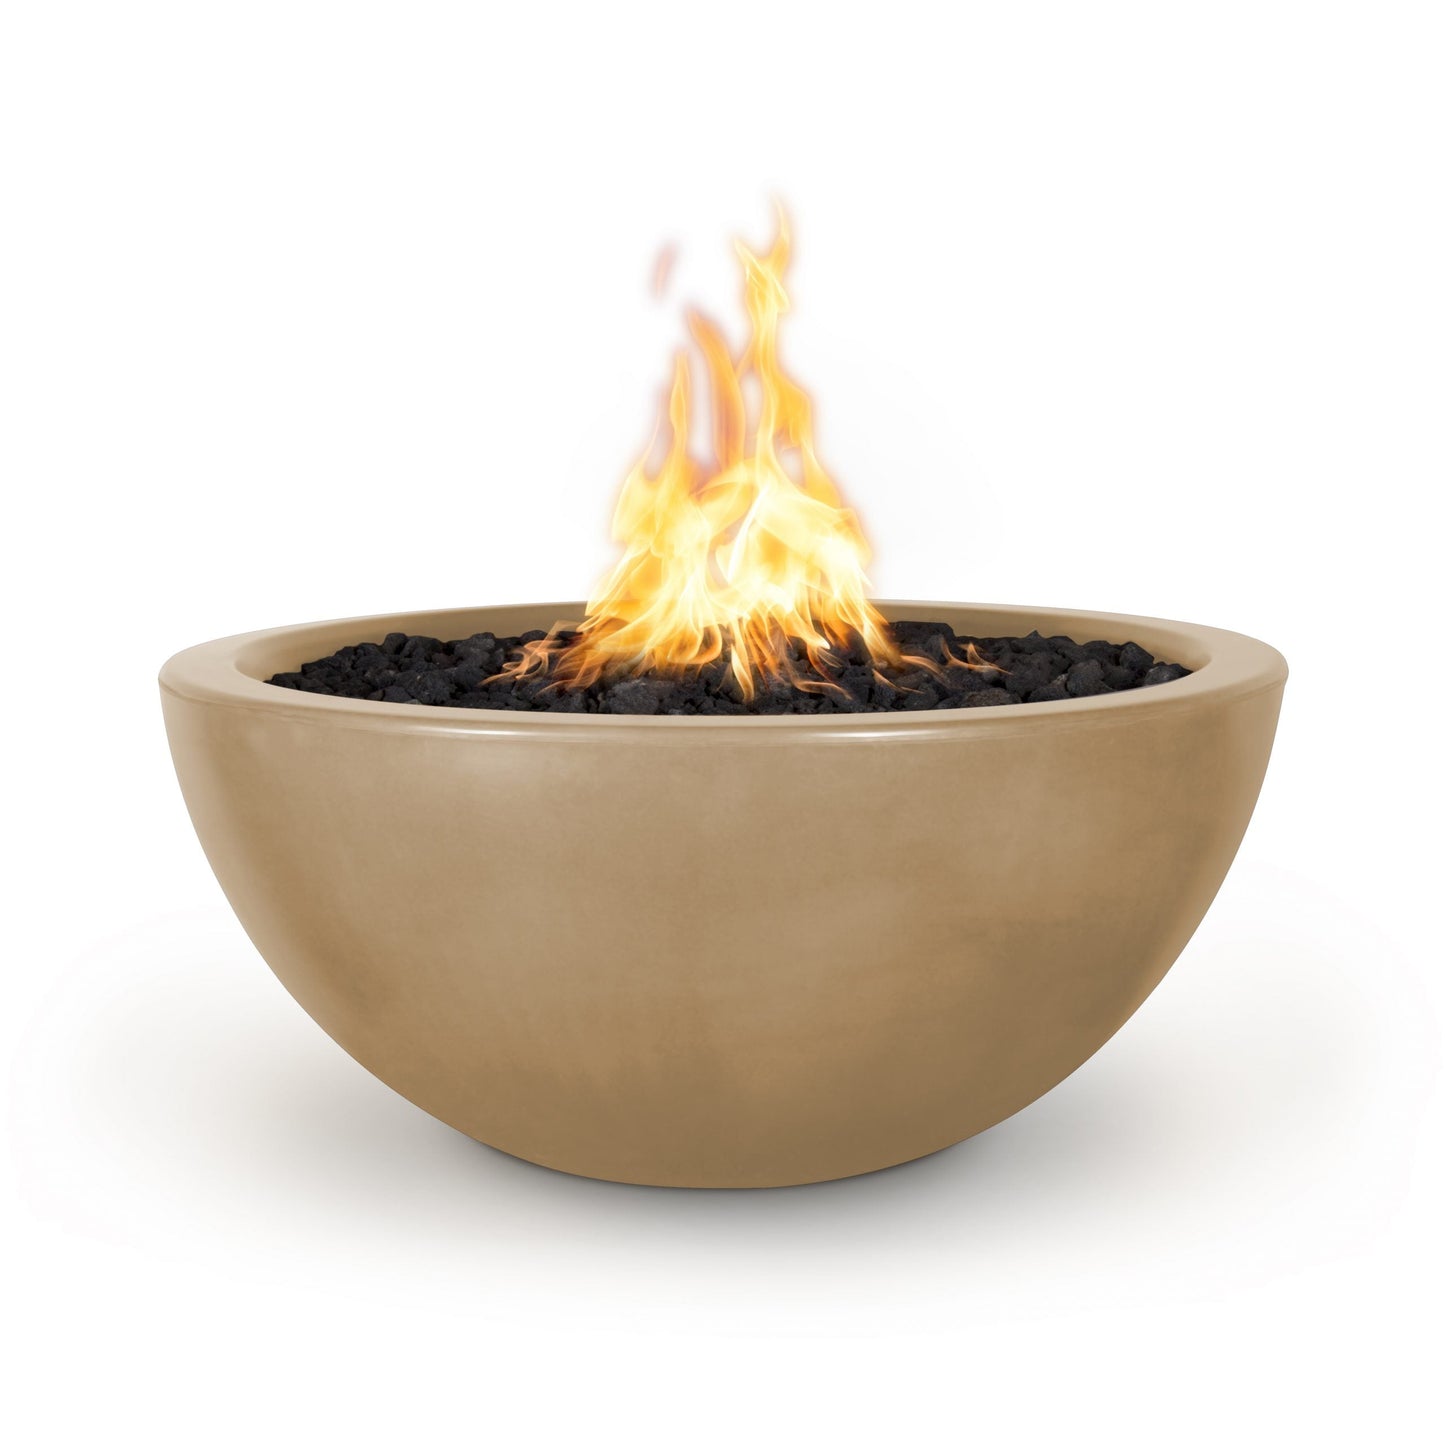 The Outdoor Plus Round Luna 30" Metallic Bronze GFRC Concrete Liquid Propane Fire Bowl with Match Lit with Flame Sense Ignition